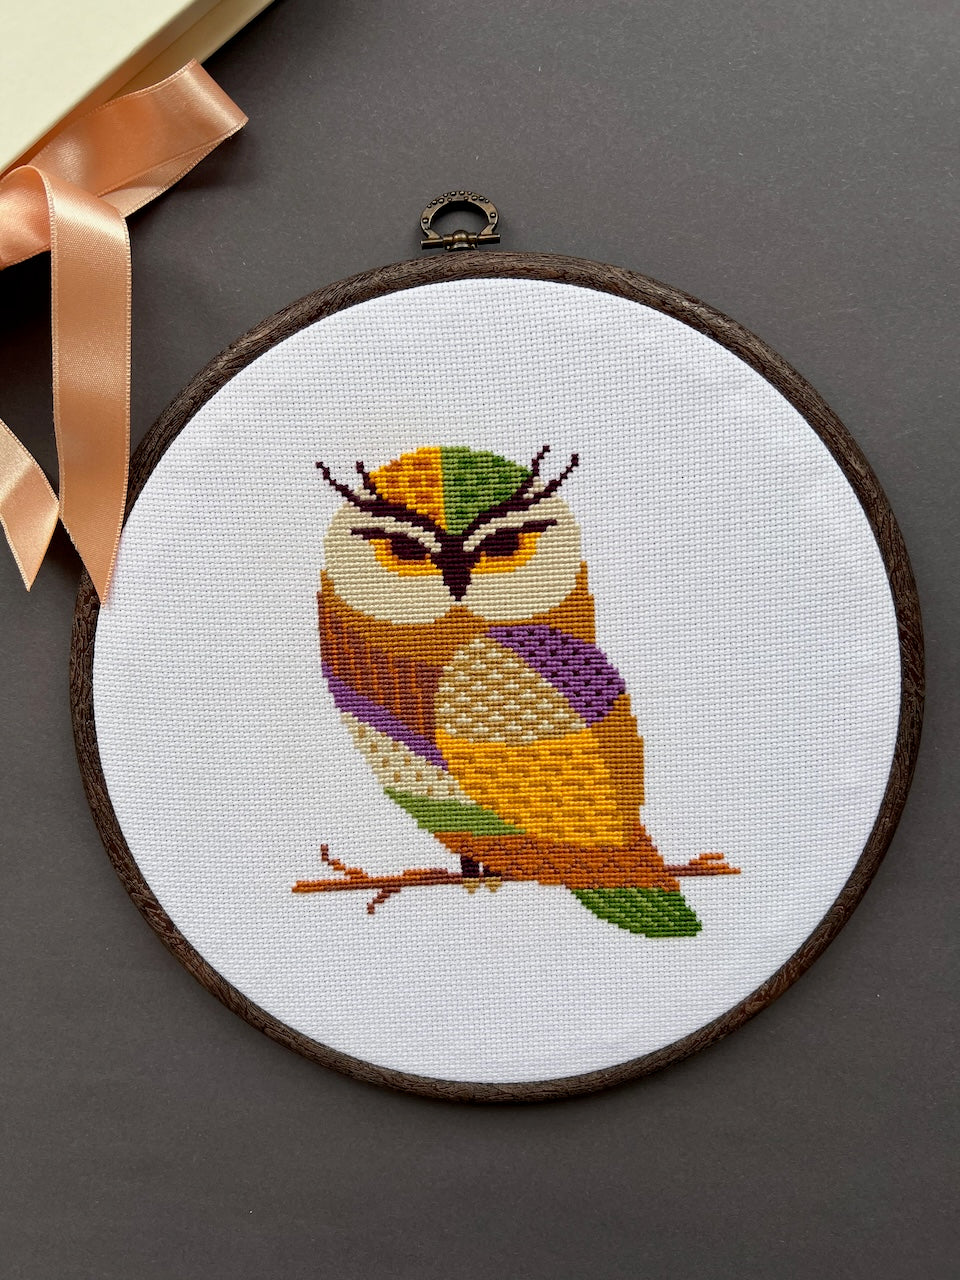 Colorful Owl - cross stitch pattern